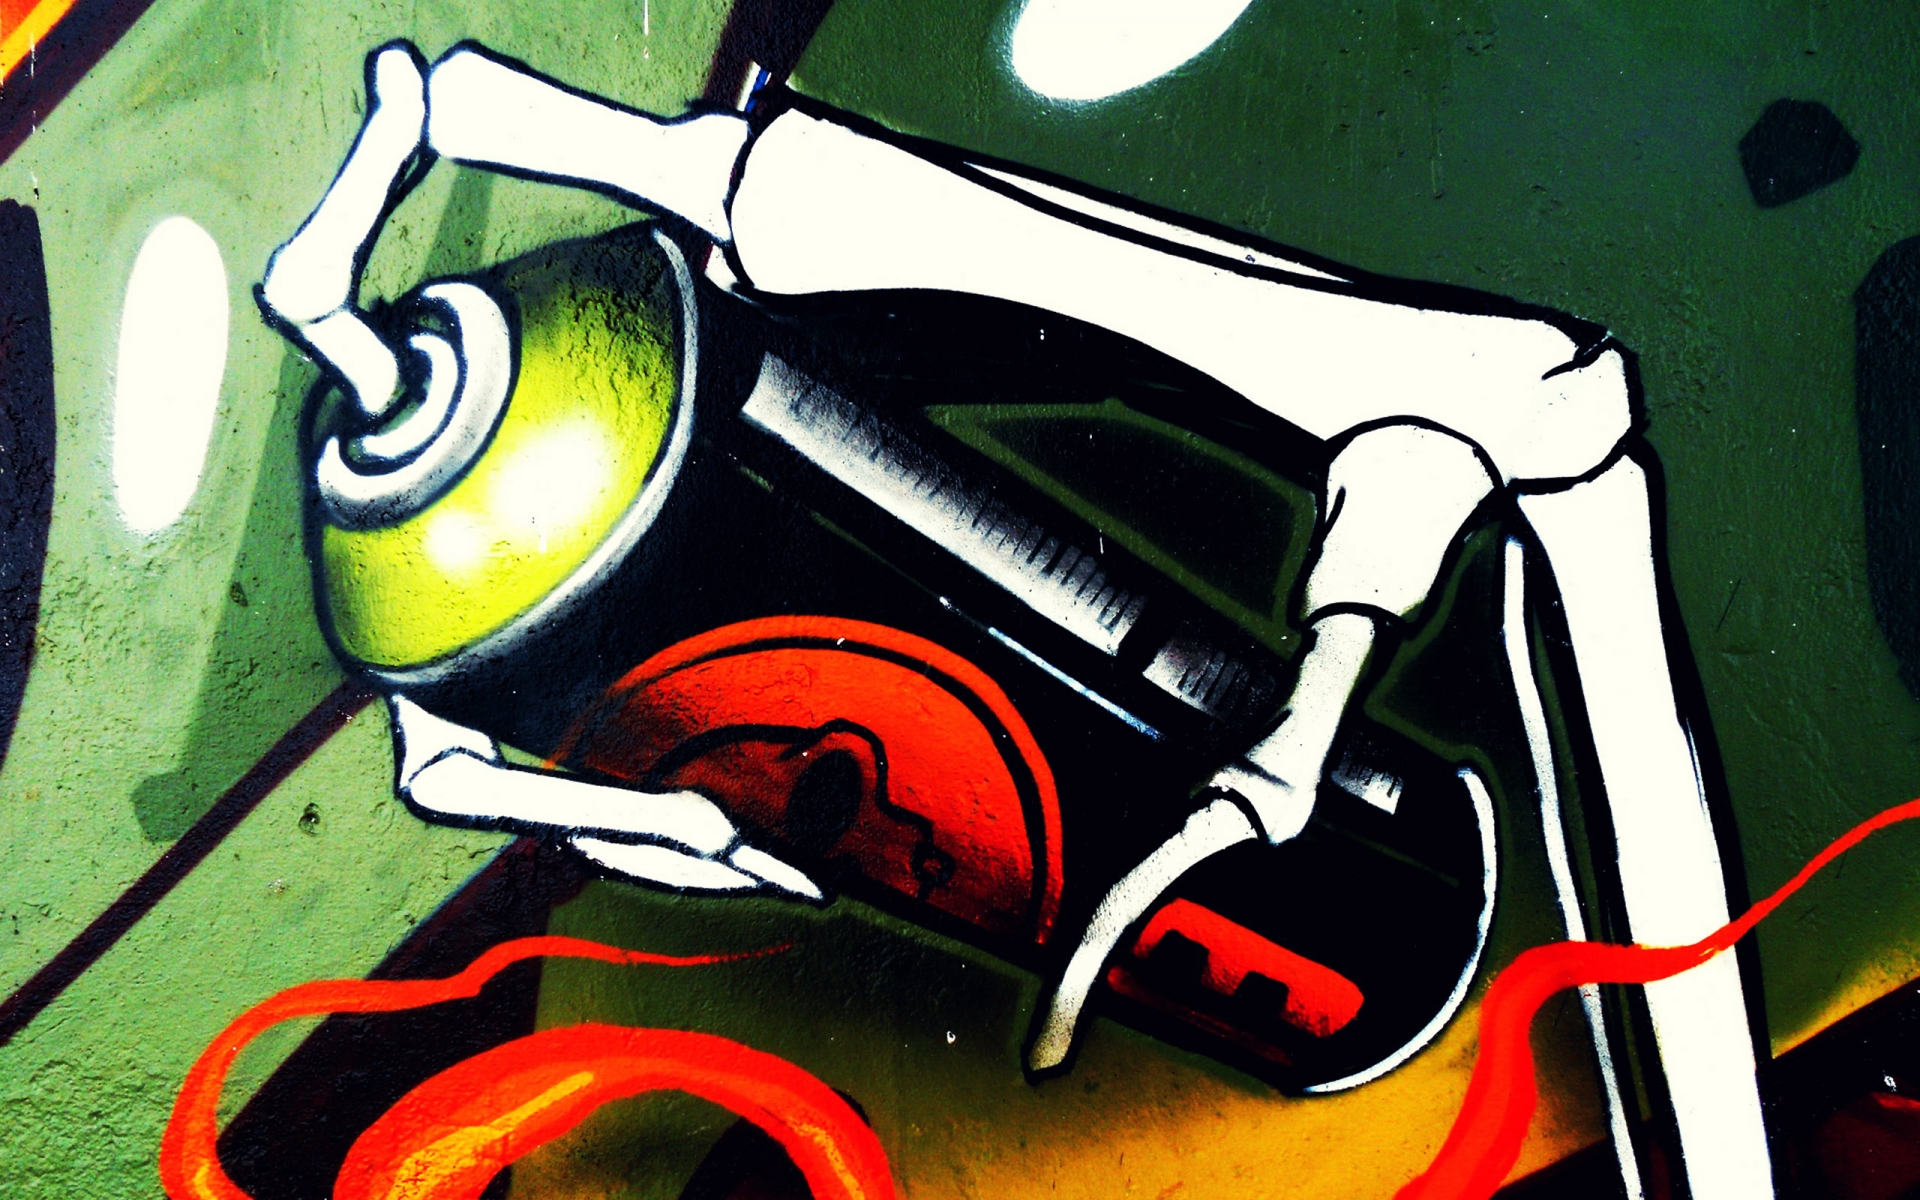 Download Free Graffiti Wallpaper Images For Laptop amp Desktops